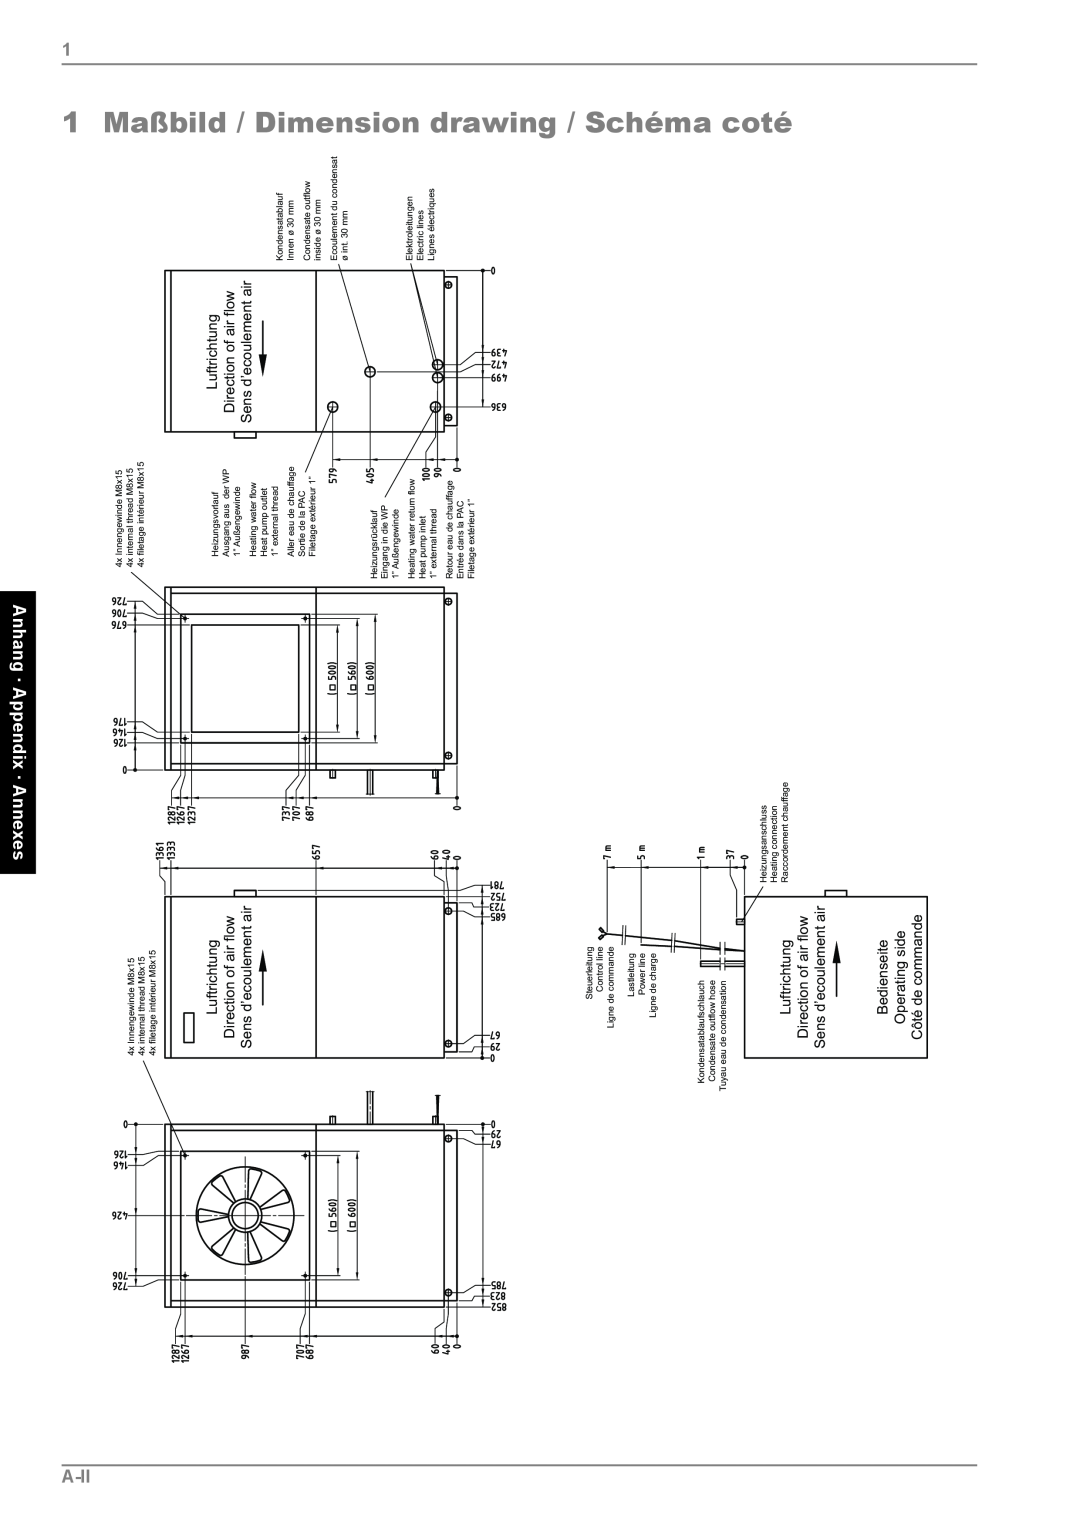 Dimplex LI 11MS operating instructions Maßbild / Dimension drawing / Schéma coté, A-Ii, Annexes · Appendix · Anhang 